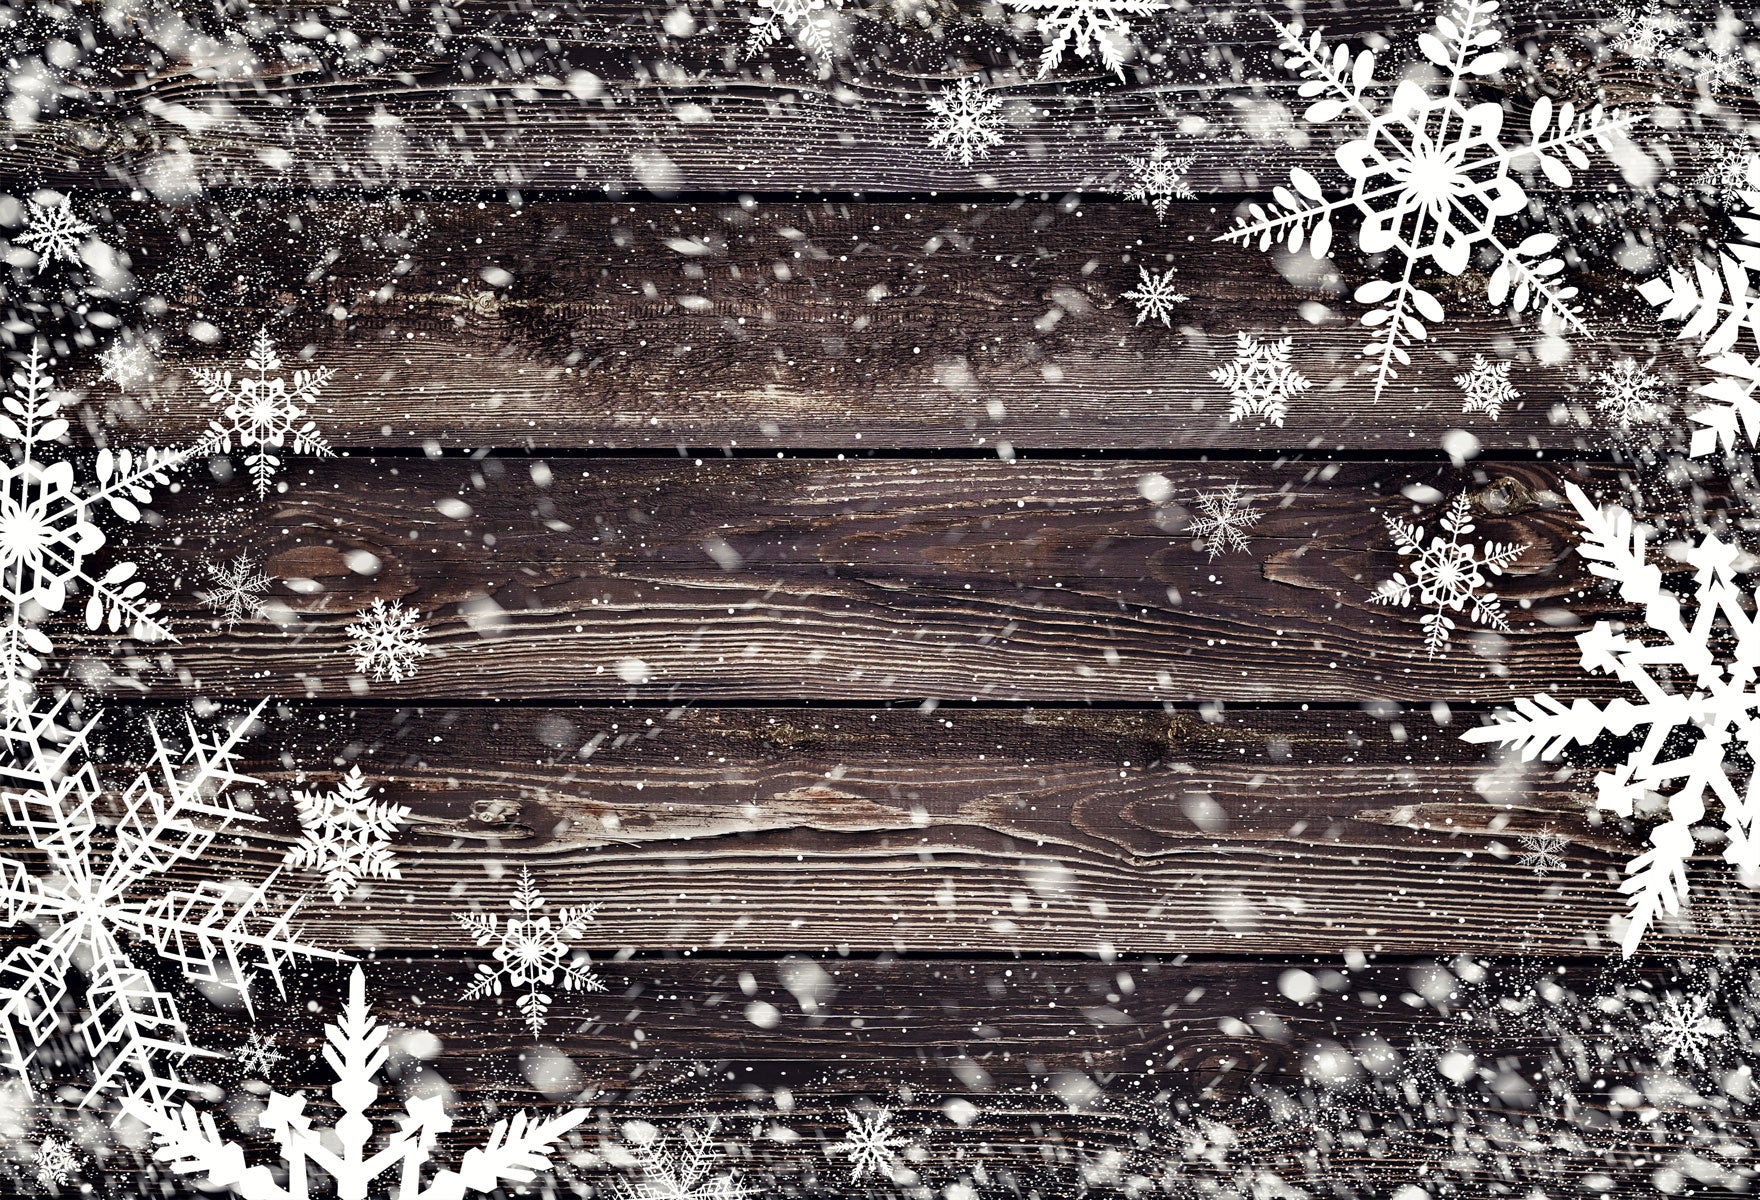 Kate Christmas Dark Winter Snowflake Wood Floor Backdrops for Photography